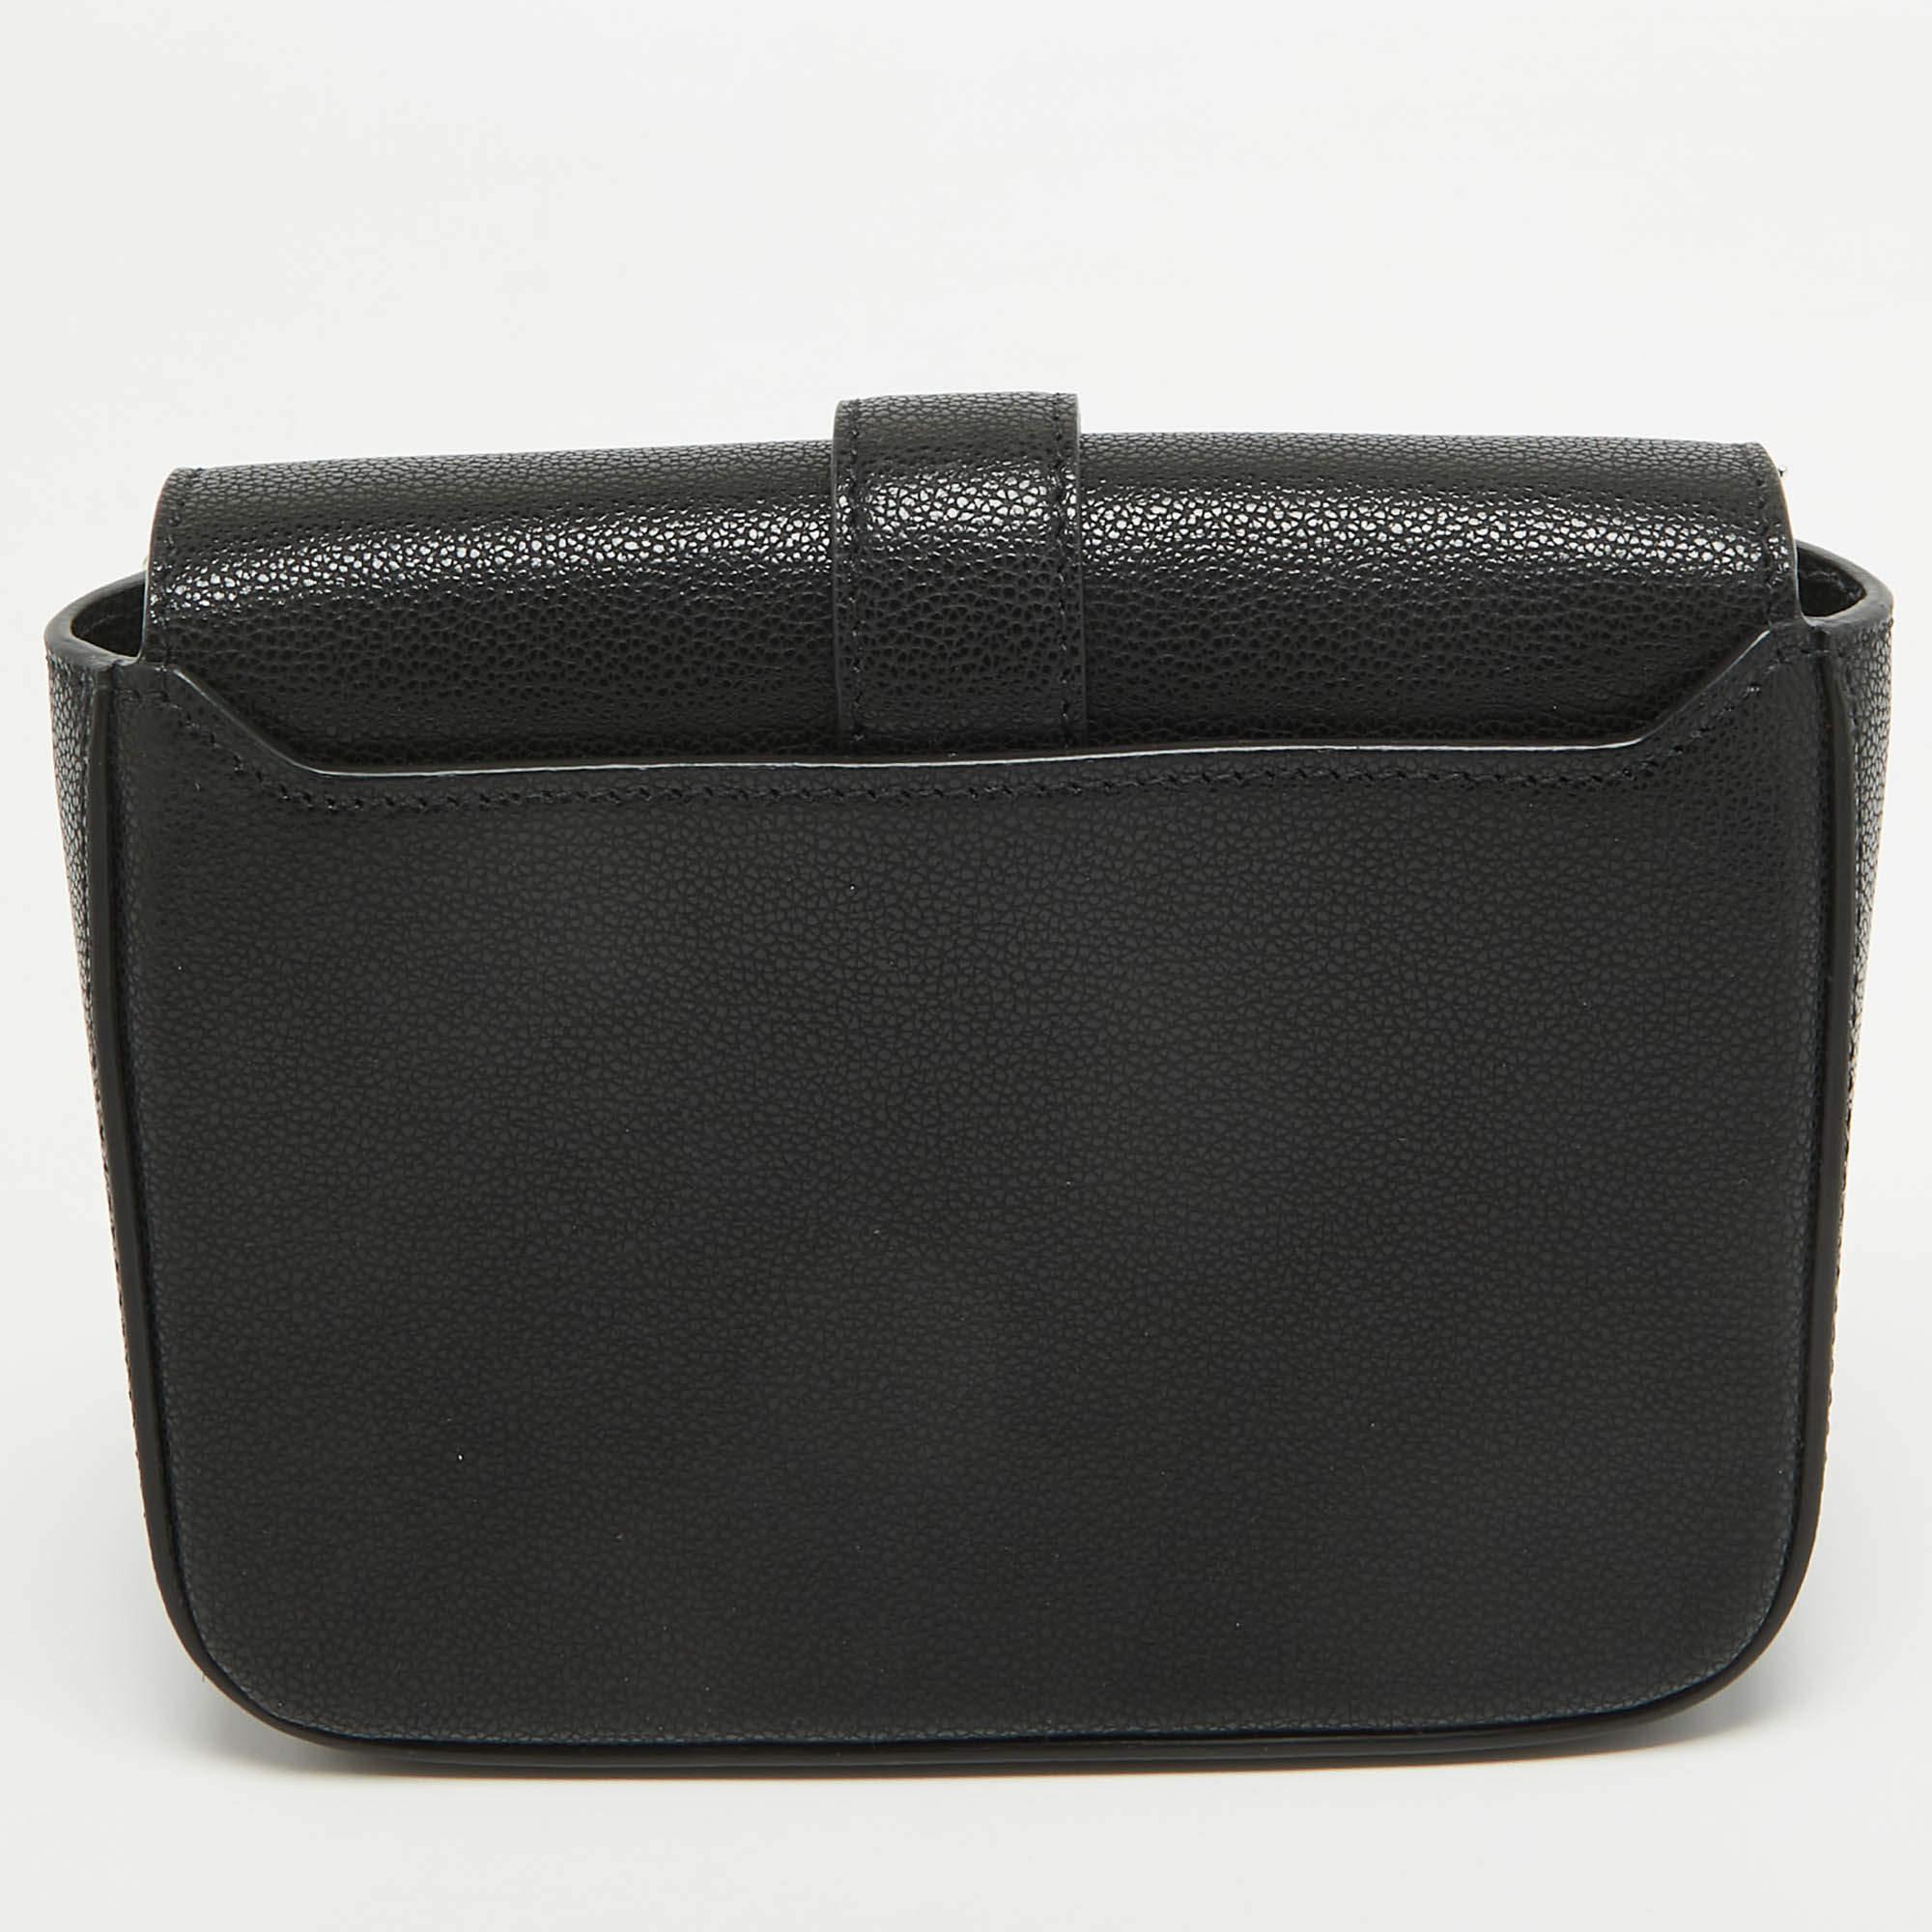 Jimmy Choo Black Leather Cheri Chain Shoulder Bag In Excellent Condition For Sale In Dubai, Al Qouz 2